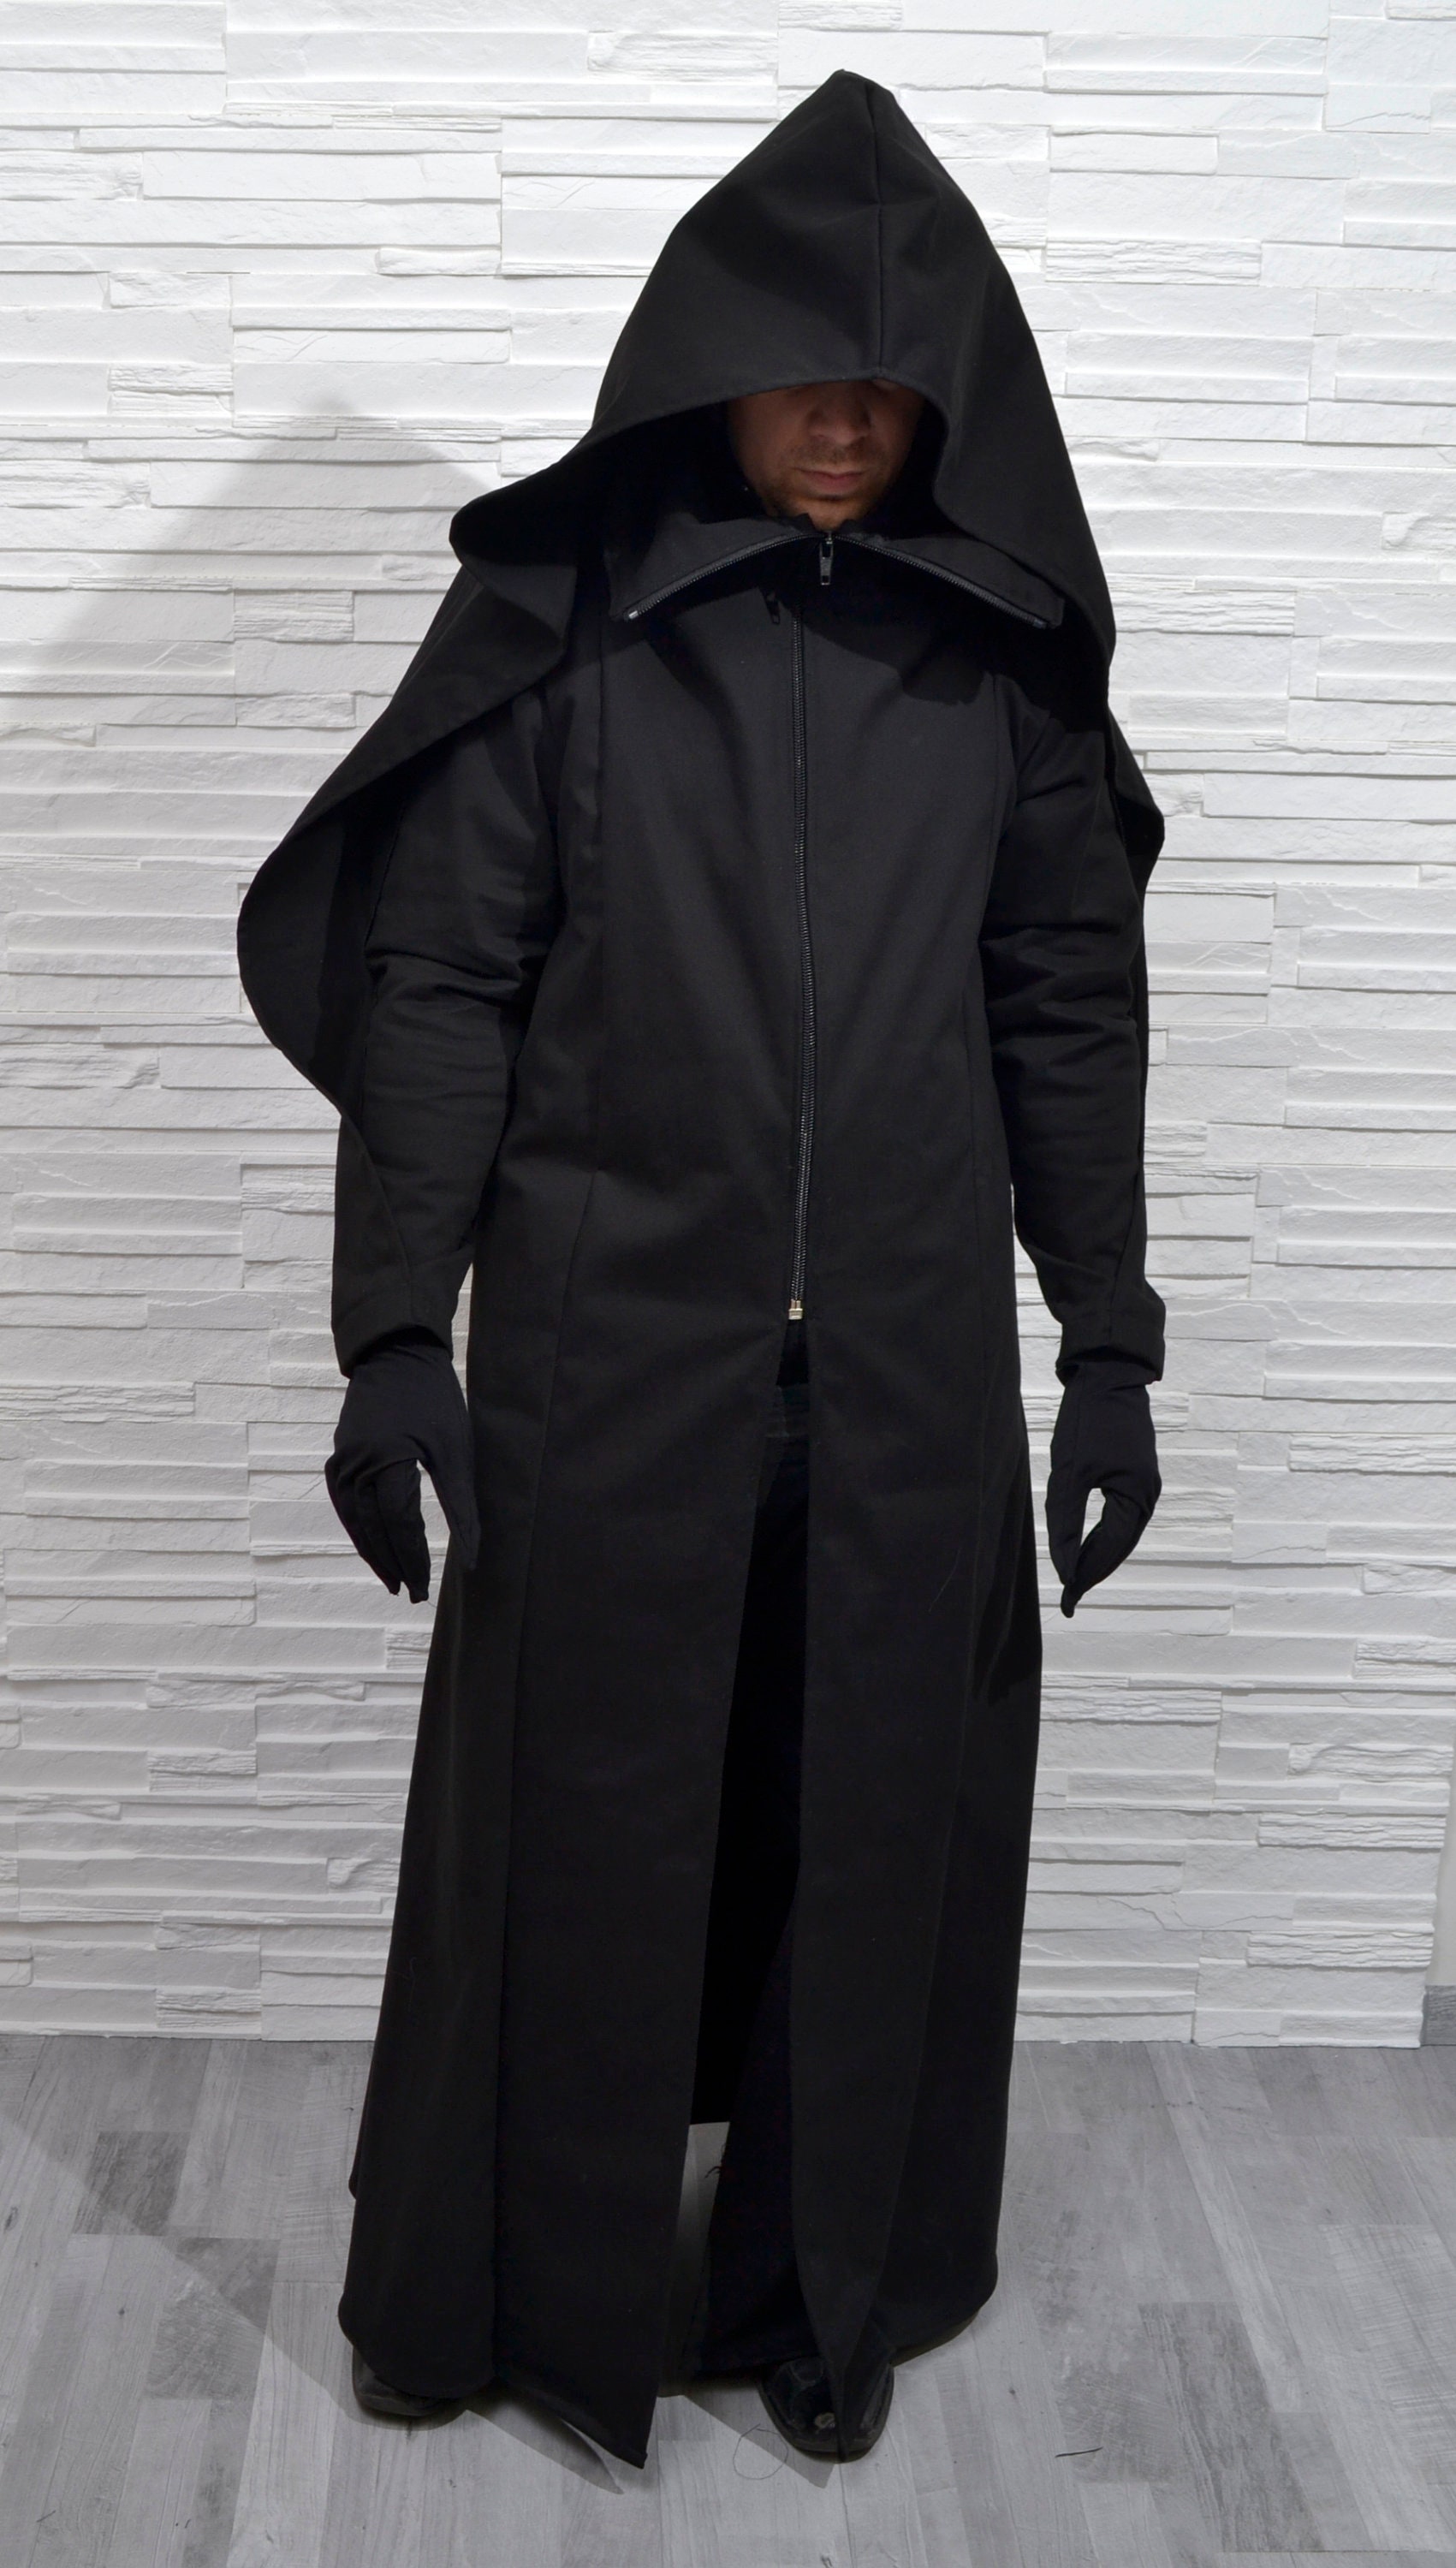 DARK VICAR Coat Large Hood Mens Black Dark Wizard Longcoat Regal